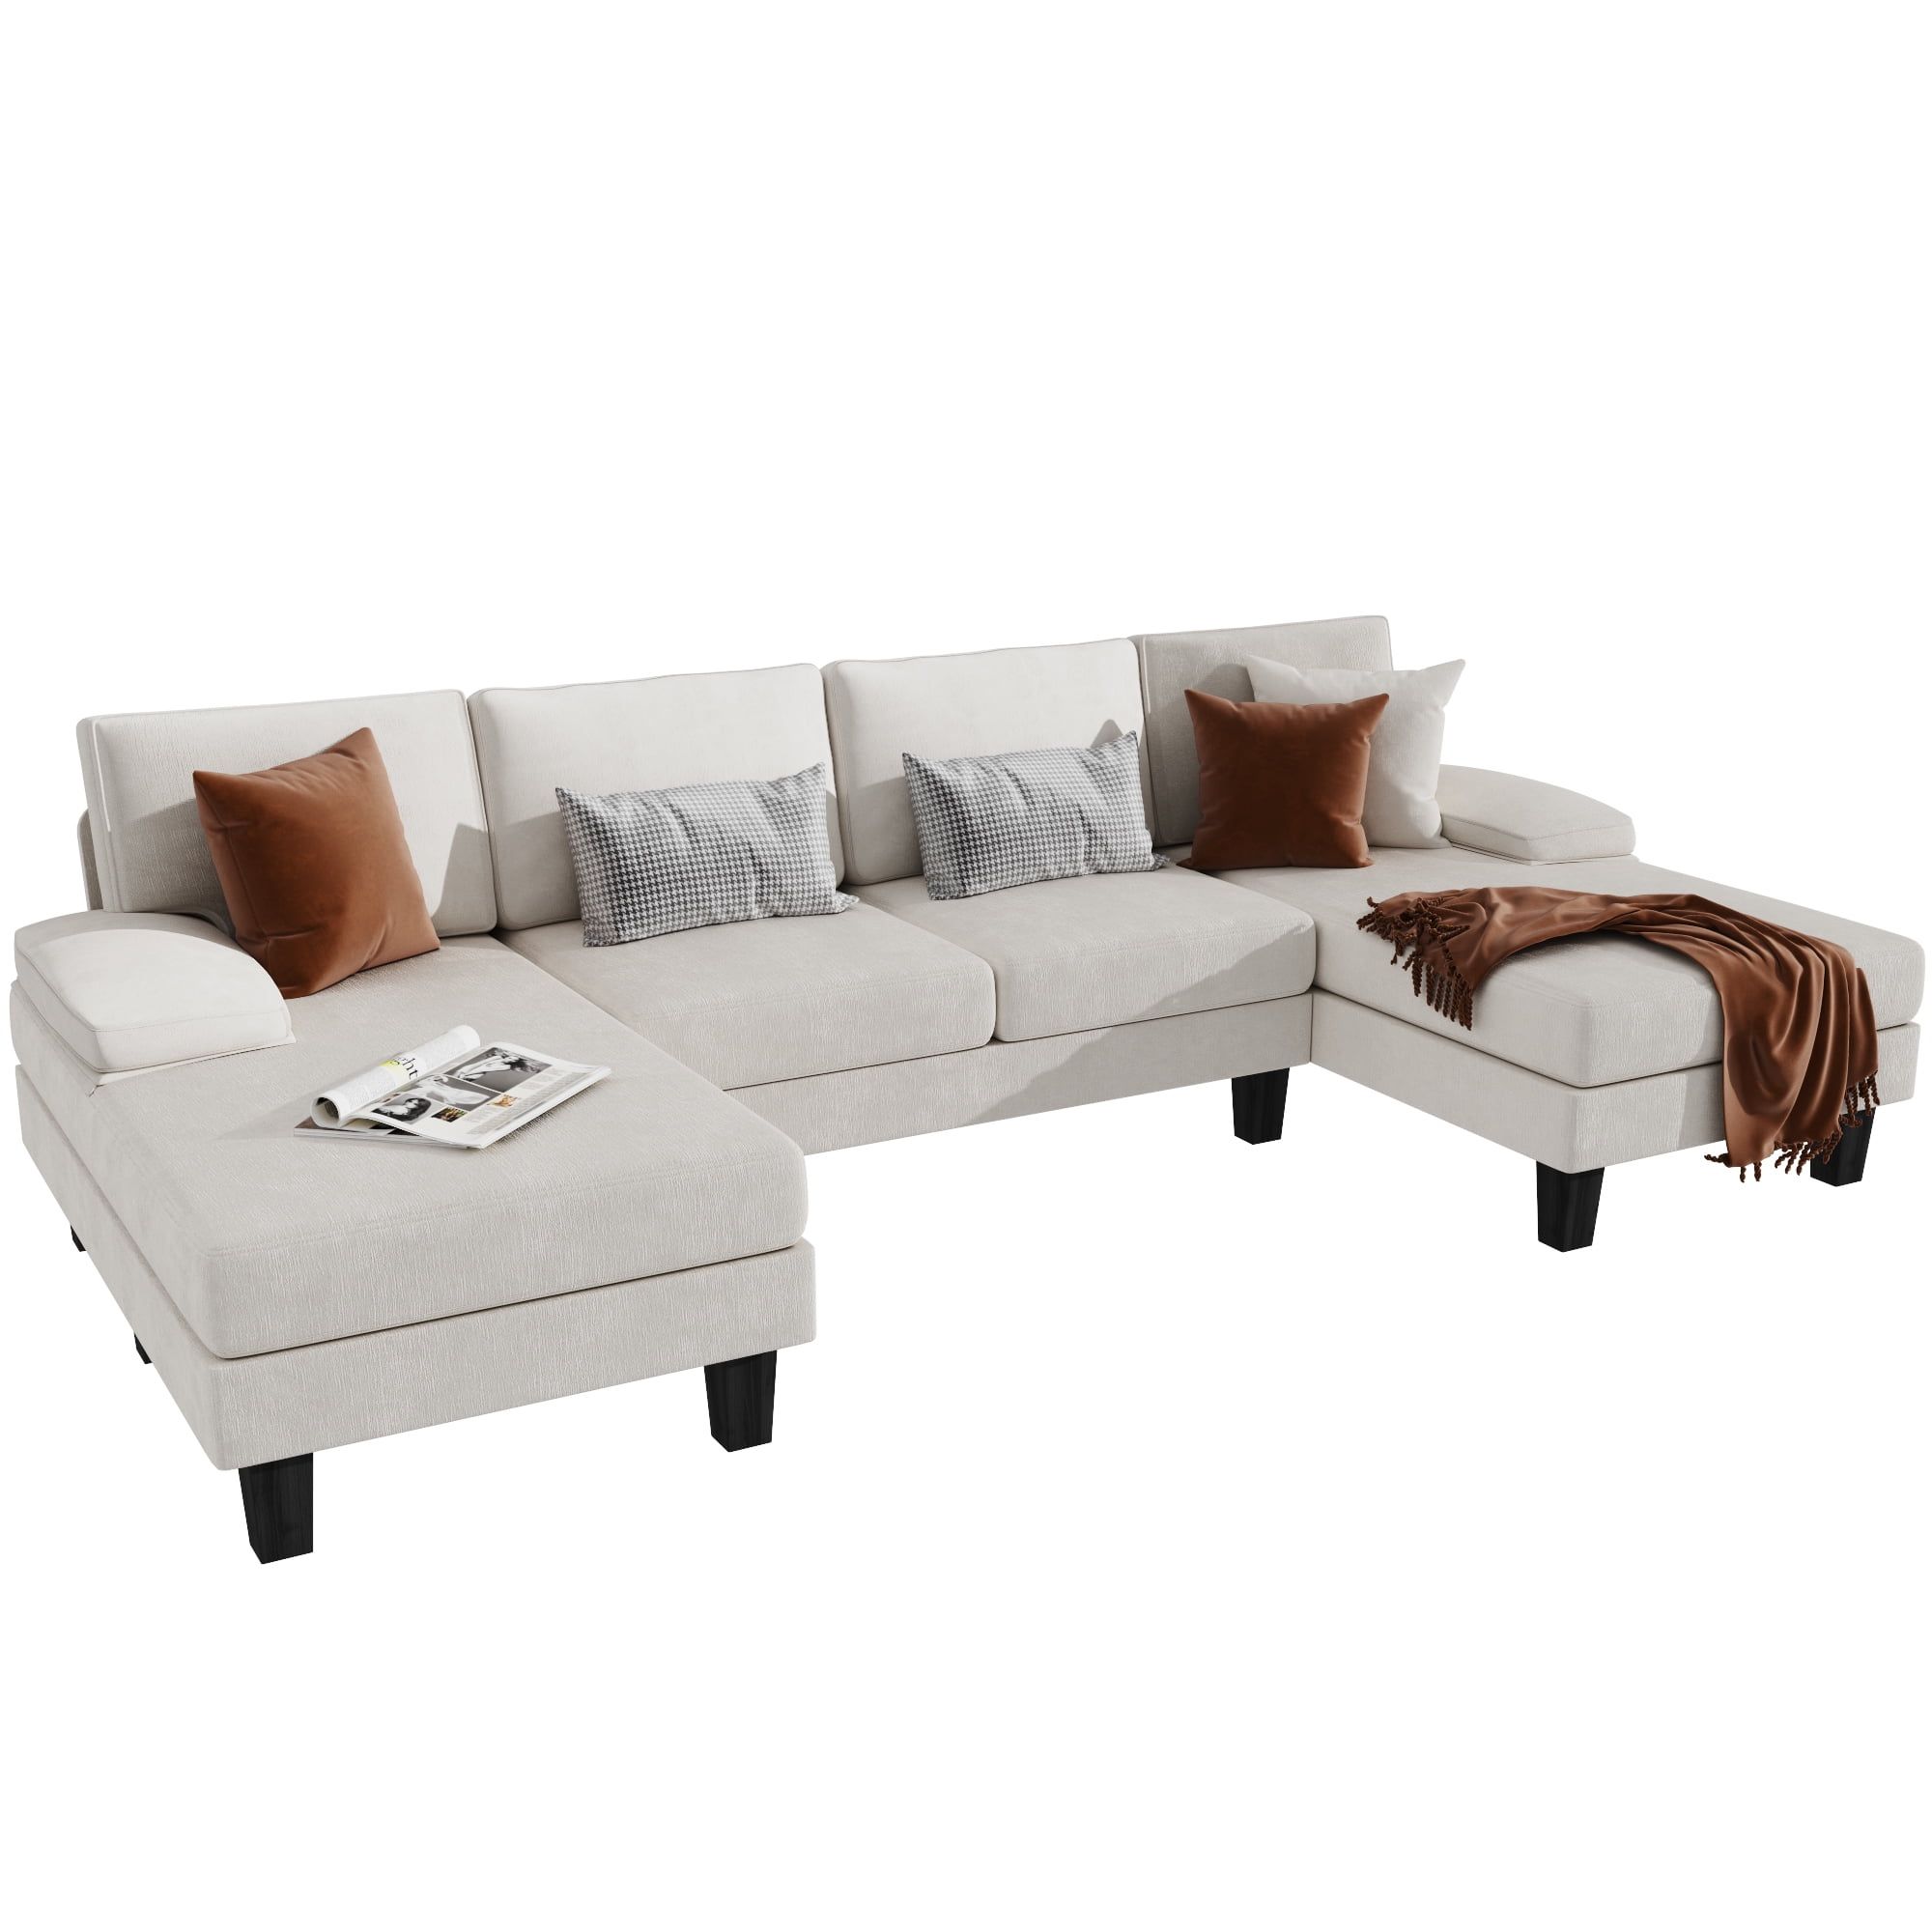 Homall Modern U Shape Sectional Sofa, Chenille Fabric Modular Couch, 4 Regarding 110" Oversized Sofas (Gallery 19 of 20)